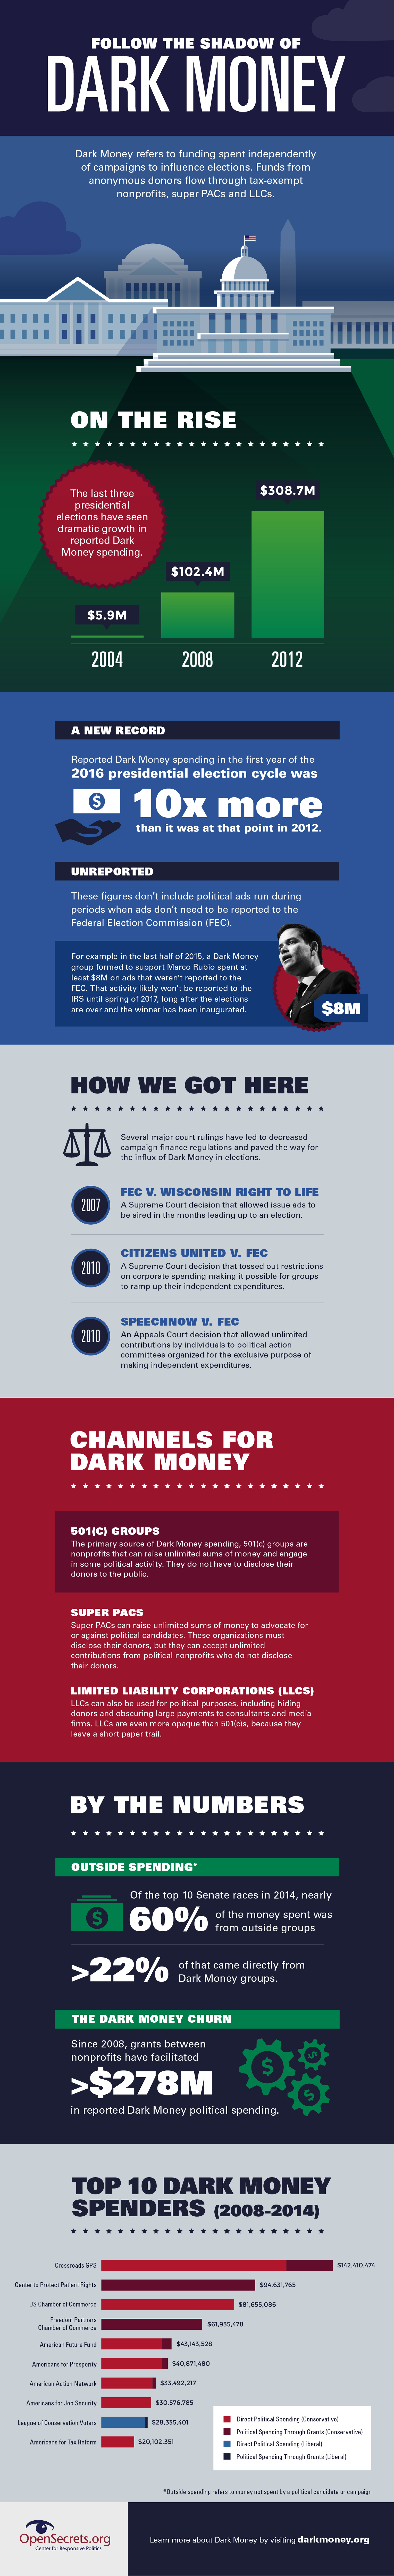 darkmoney-shadow-infographic